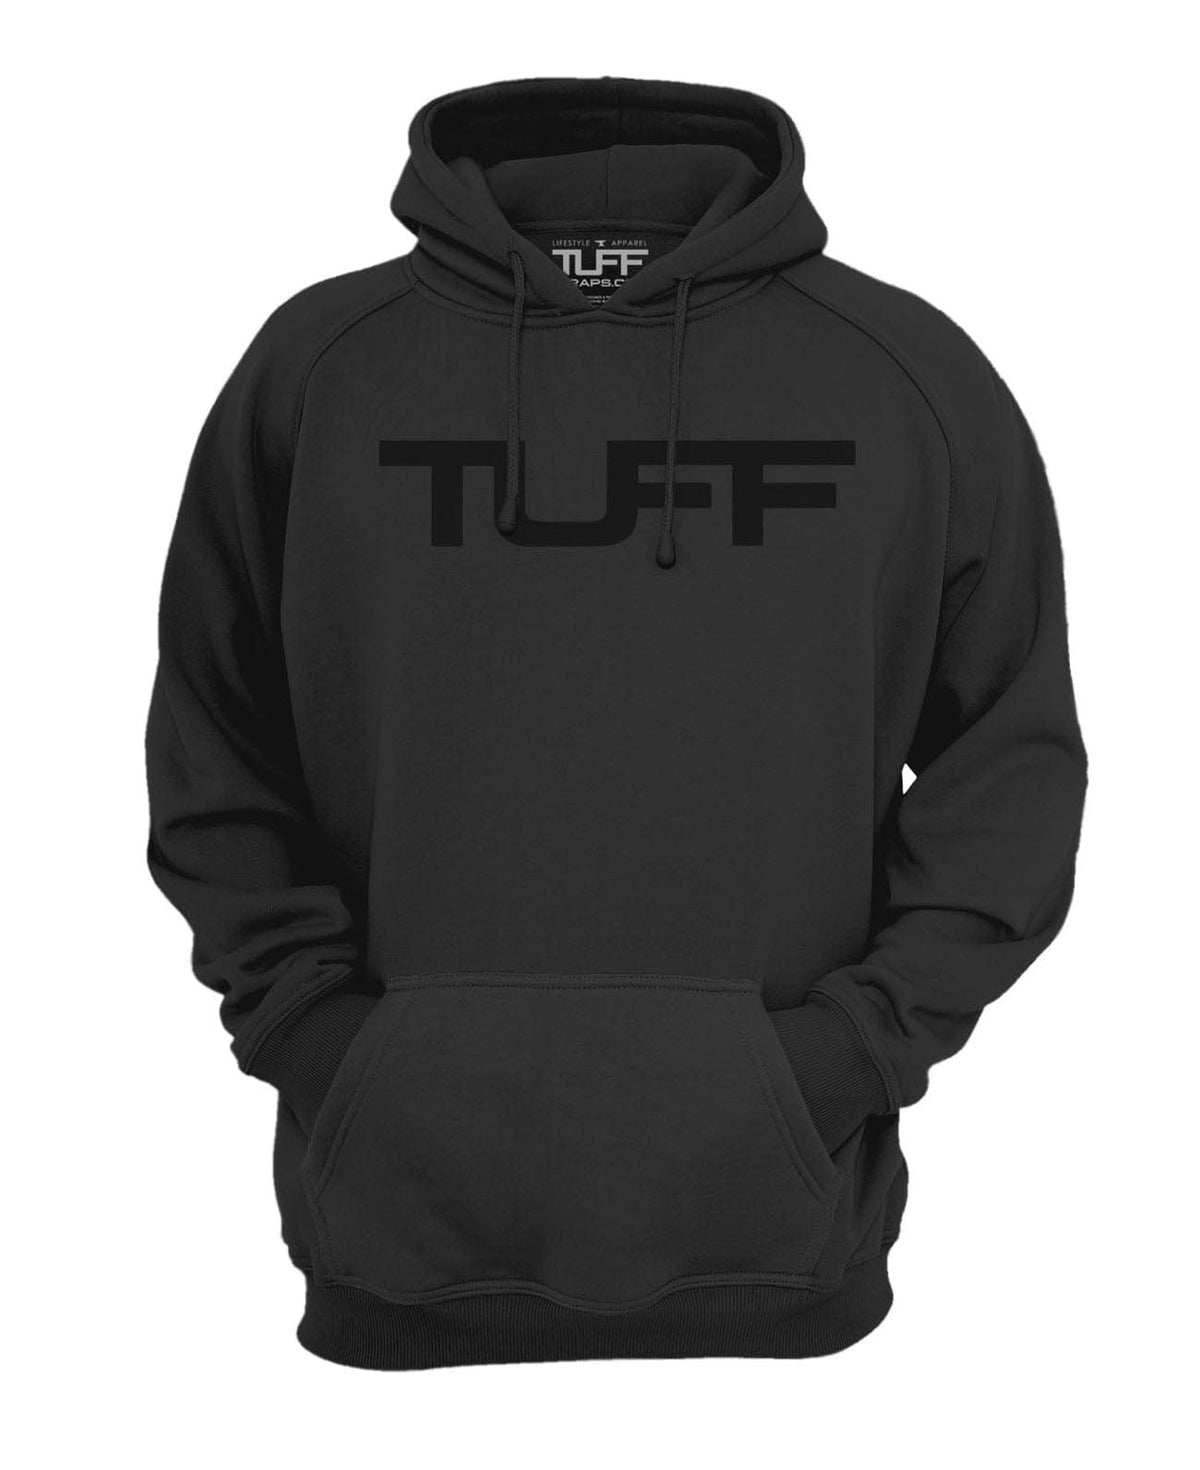 Solid Black TUFF Apocalyptic Hooded Sweatshirt S / Black TuffWraps.com